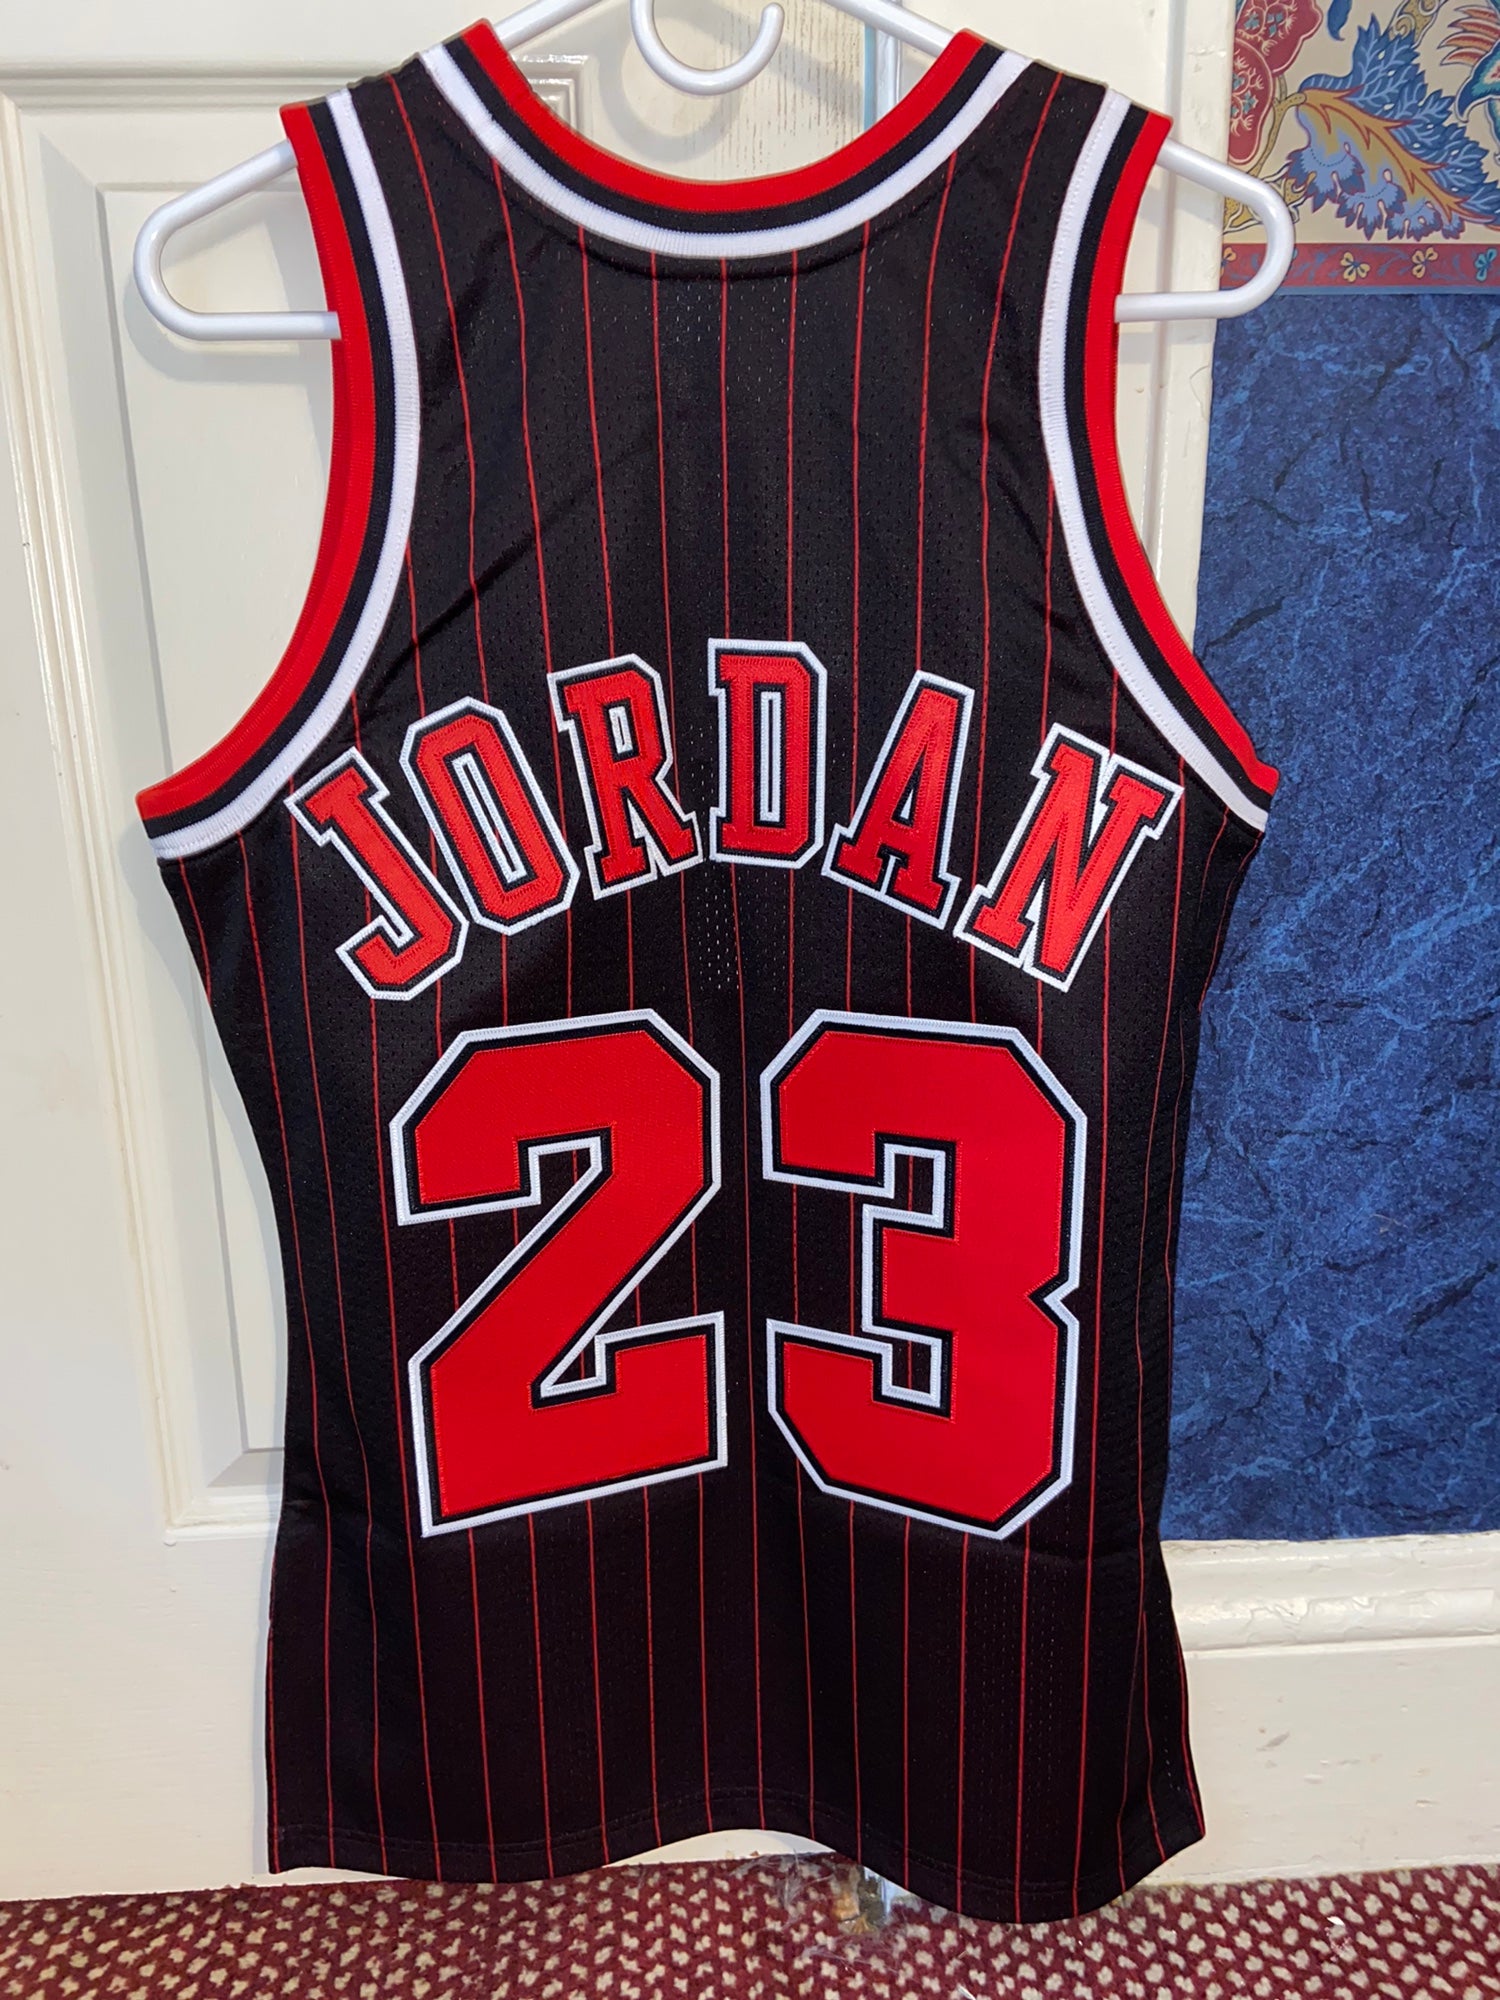 Michael Jordan Chicago Bulls Mitchell & Ness 1996 Hardwood Classics  Authentic Jersey - Black